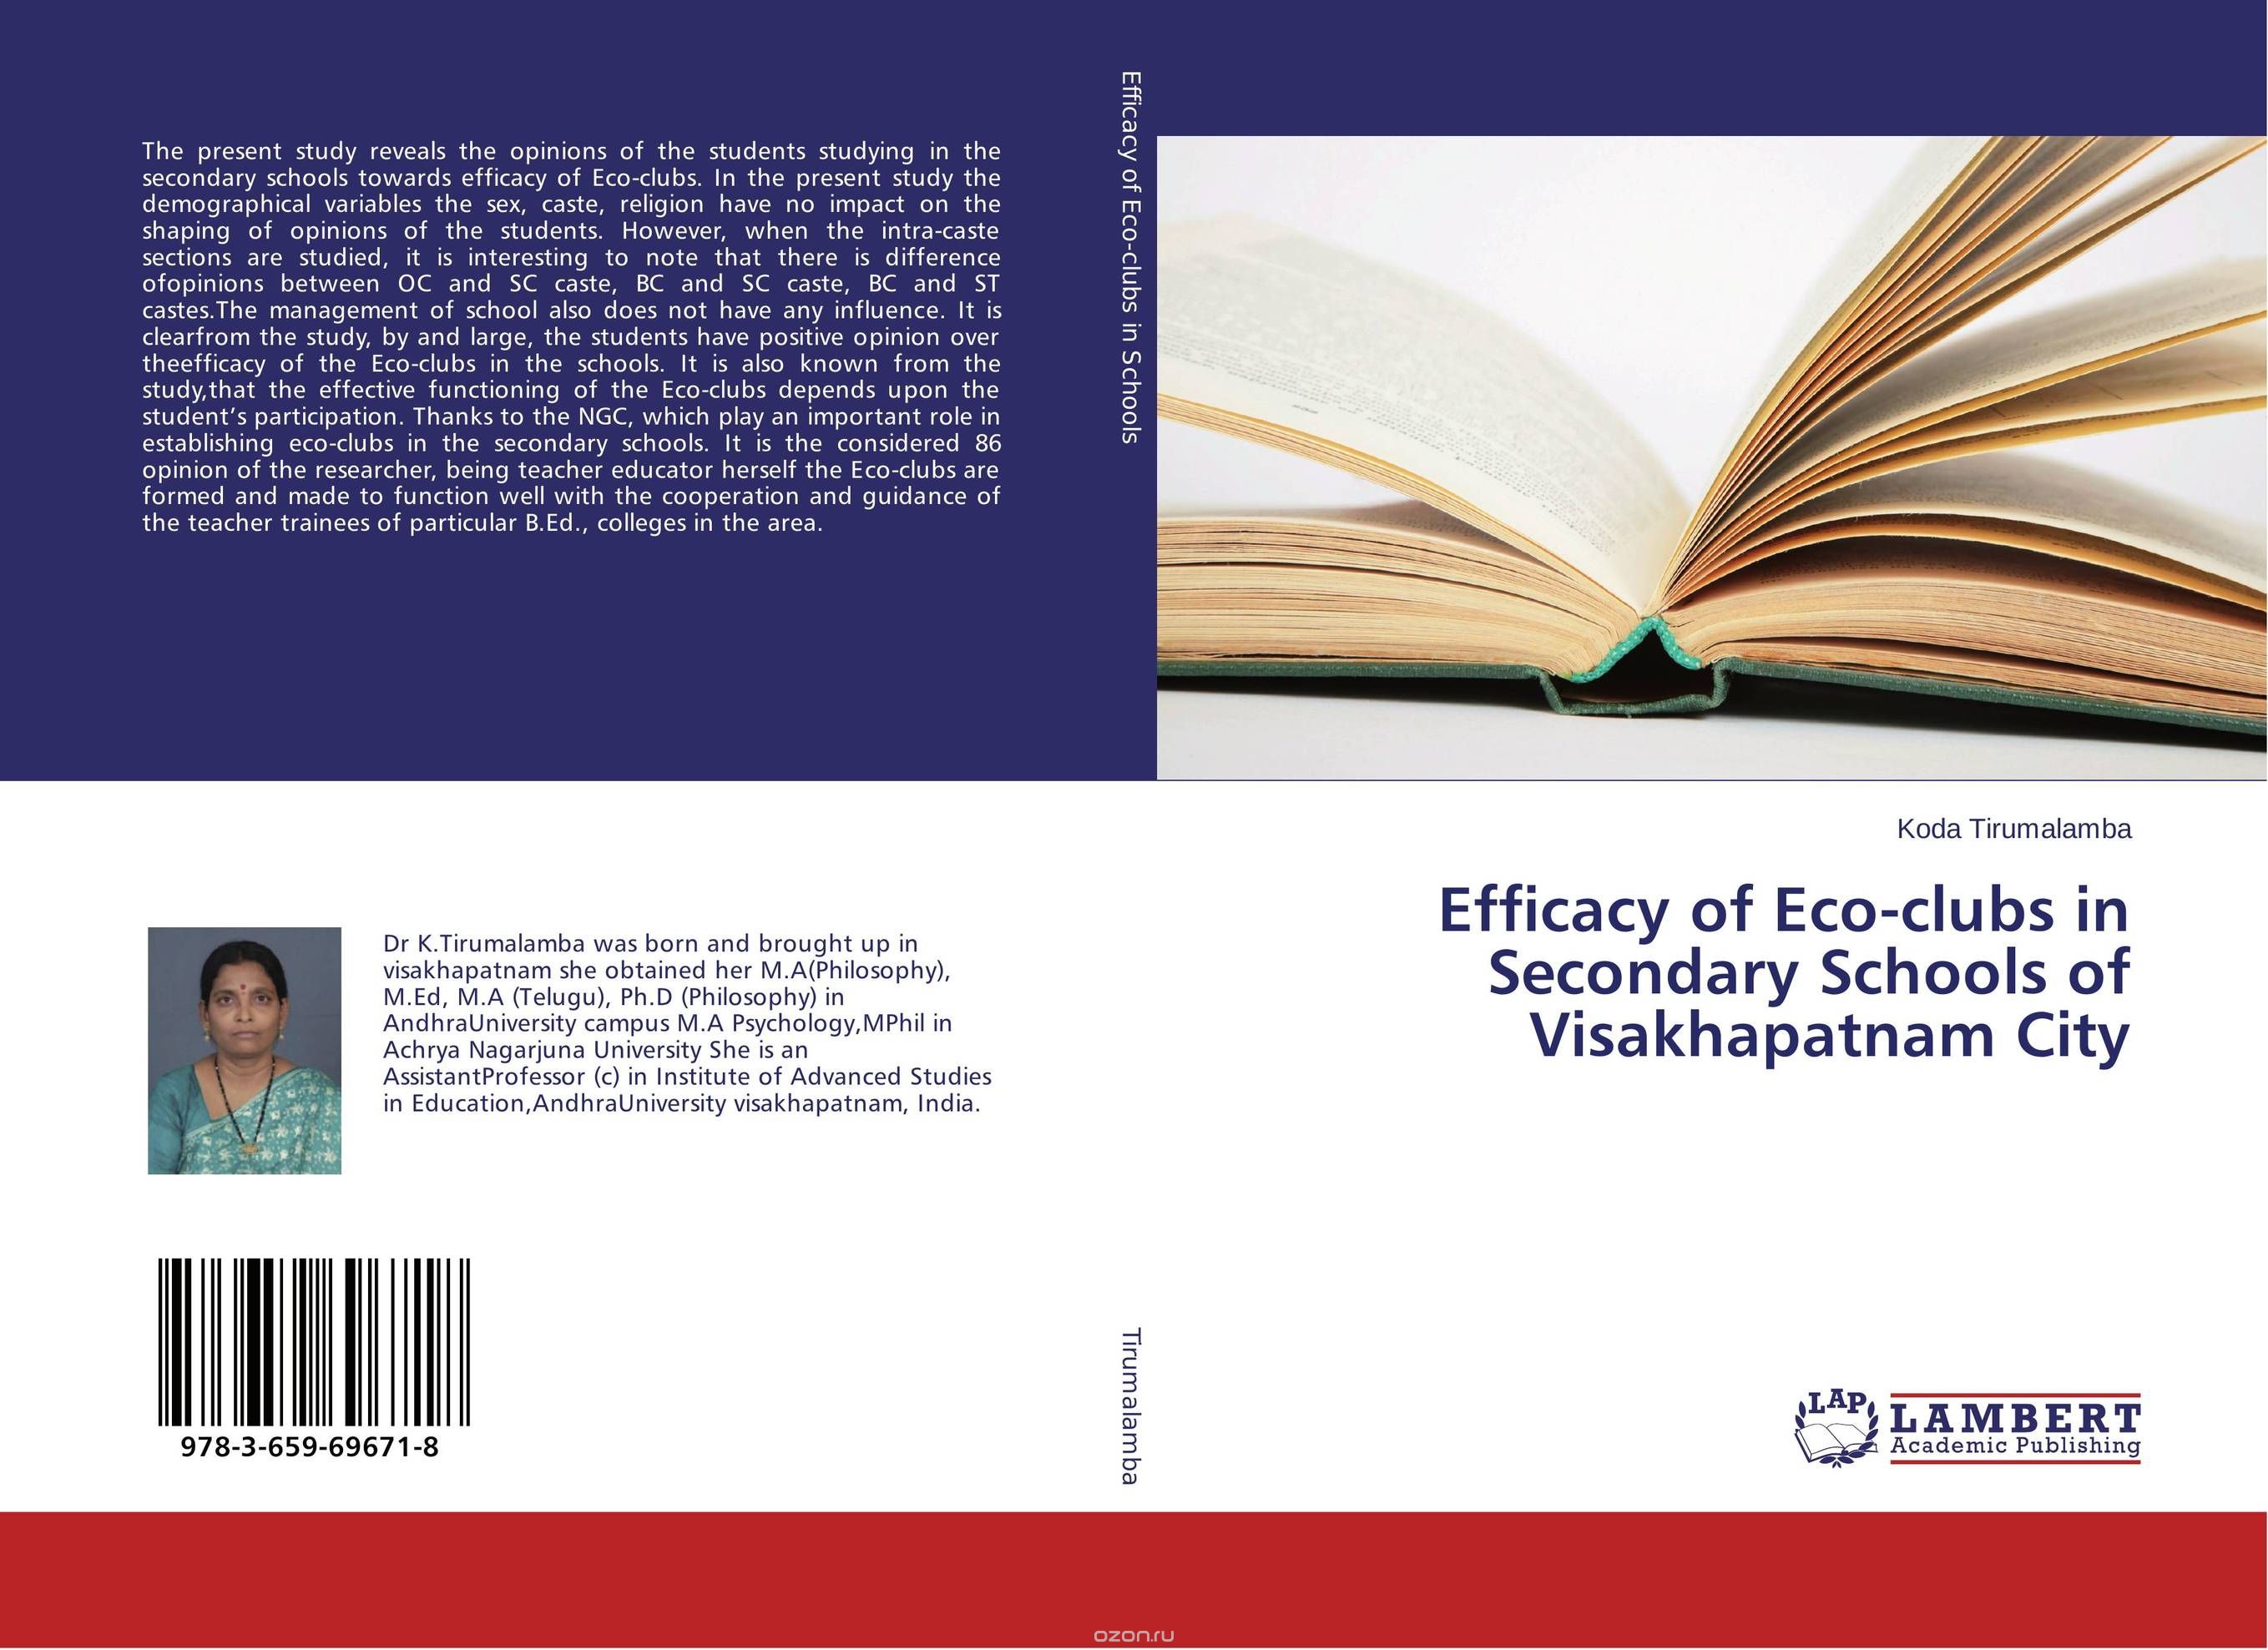 Скачать книгу "Efficacy of Eco-clubs in Secondary Schools of Visakhapatnam City"